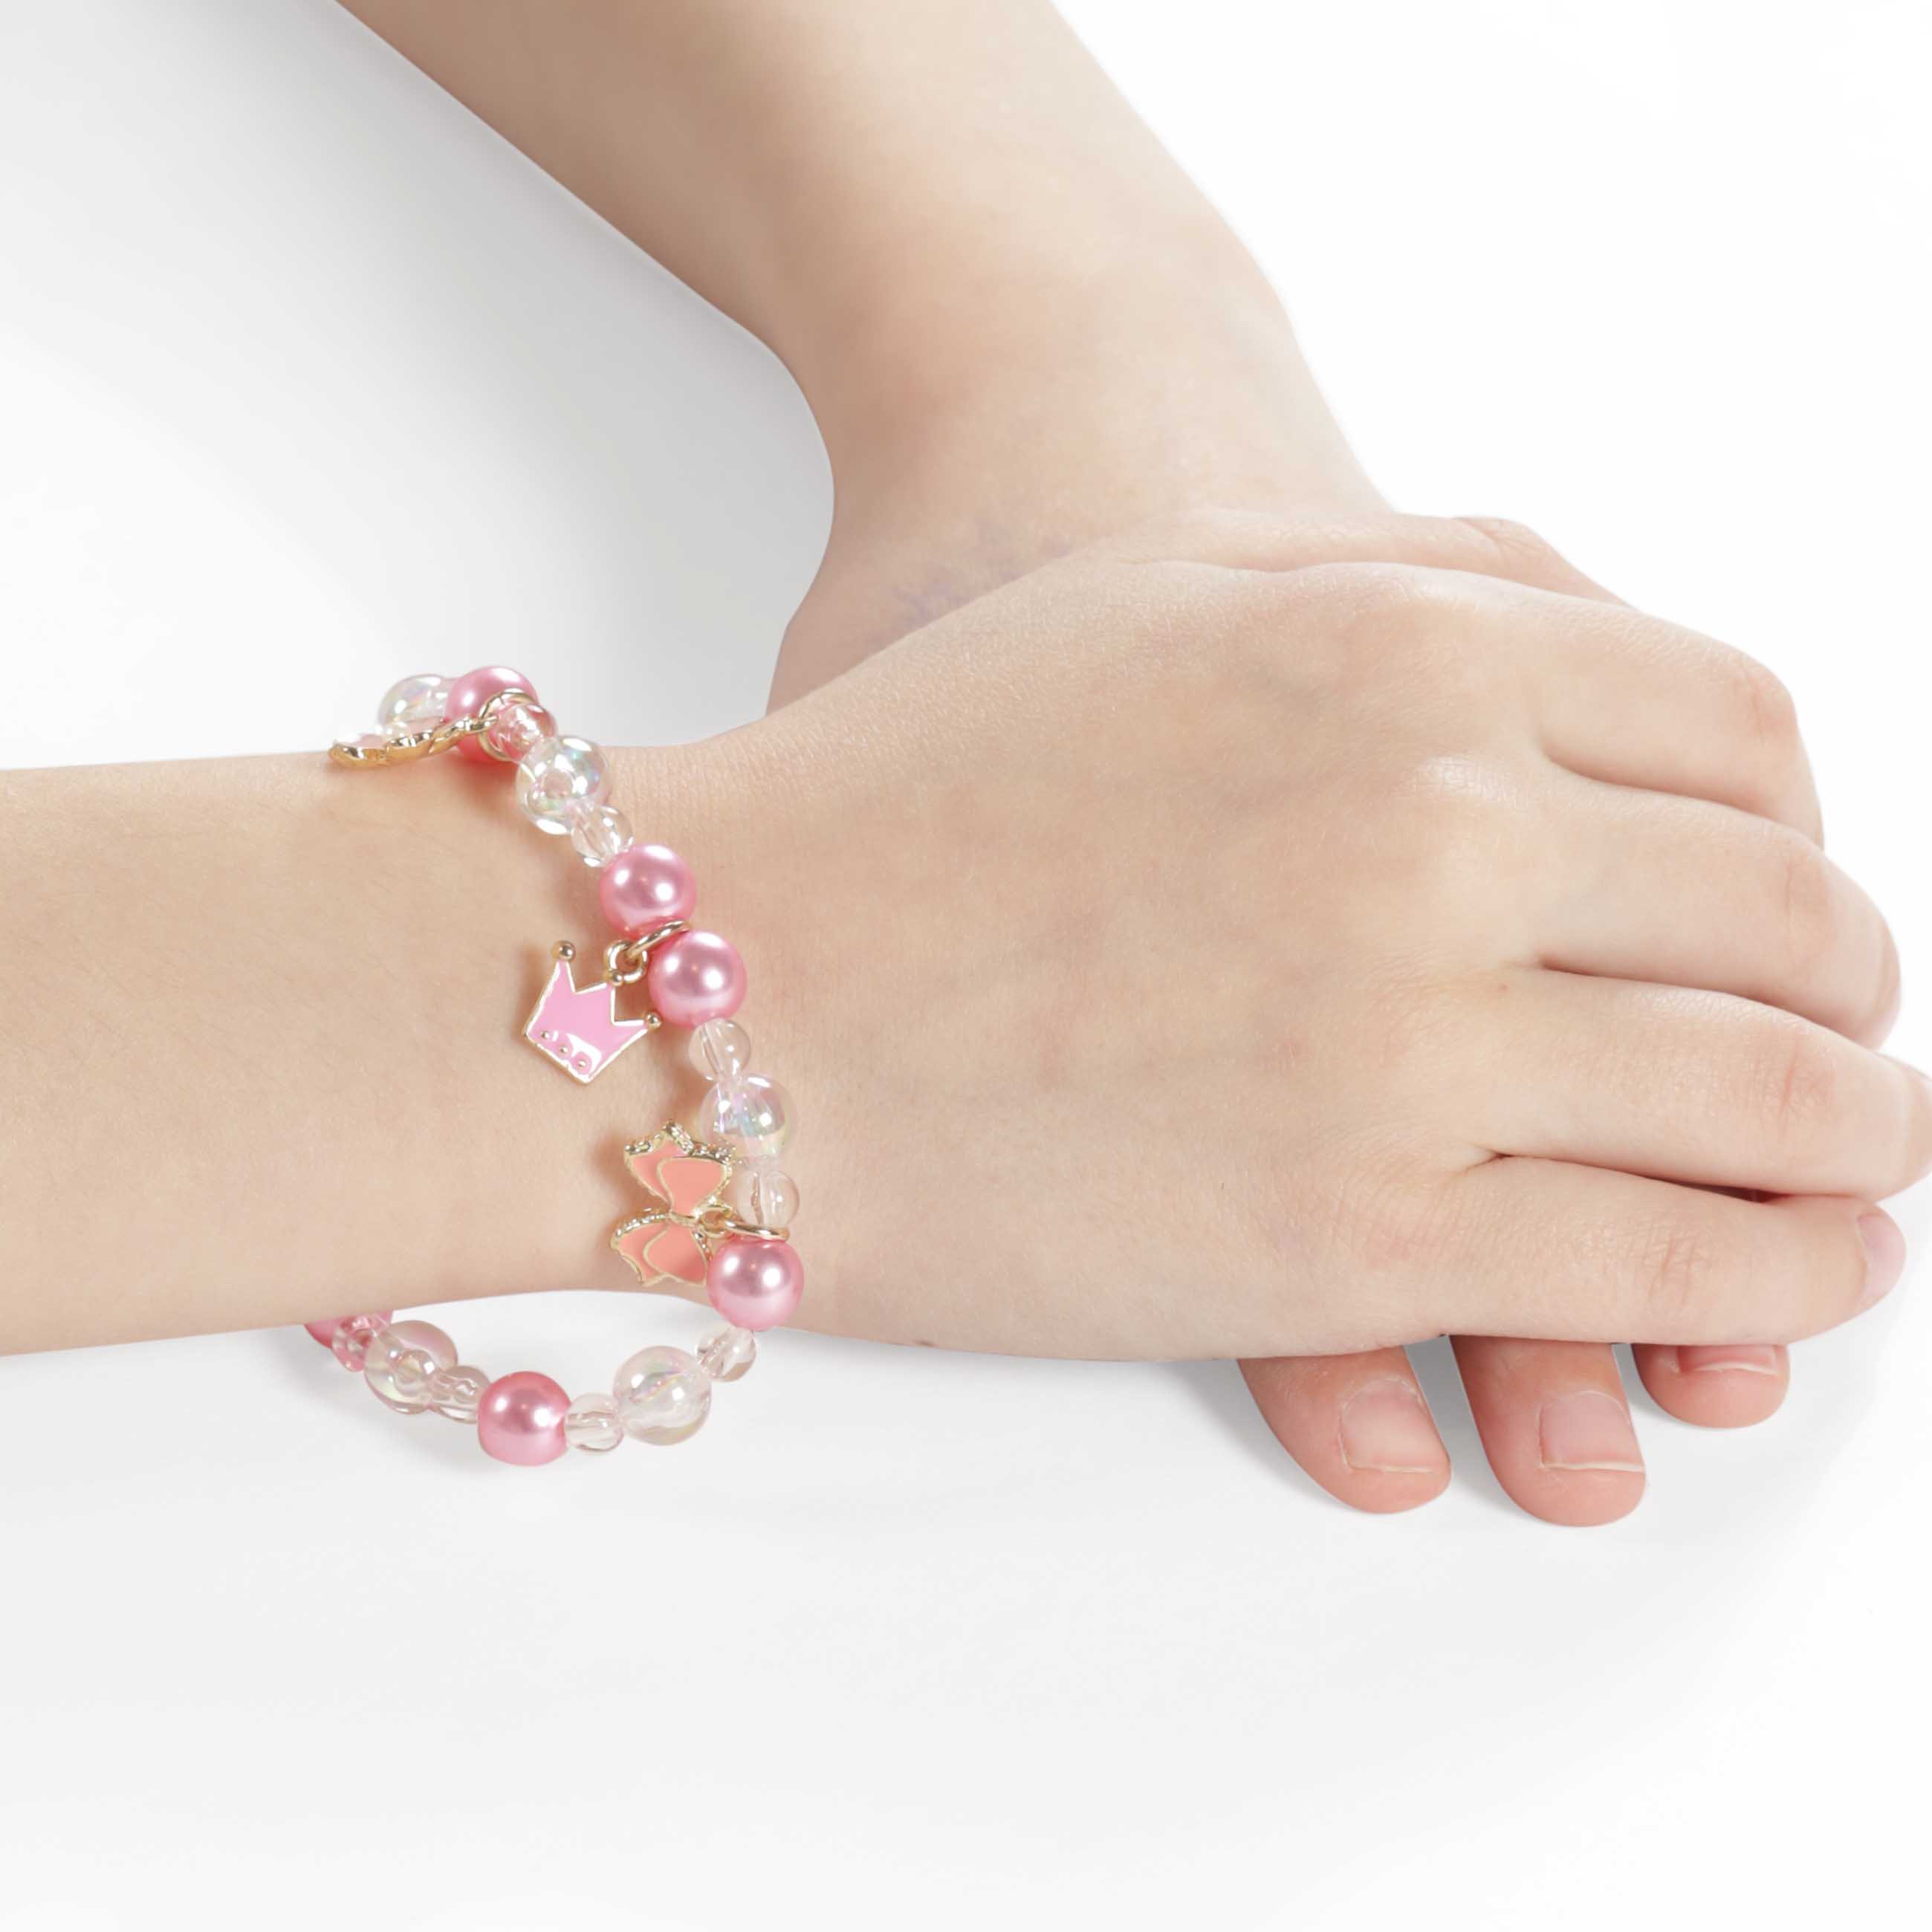 Bracelet, 8 cm, children's, with pendants, Plastic / metal, Pink, Crown, Jewelry изображение № 4